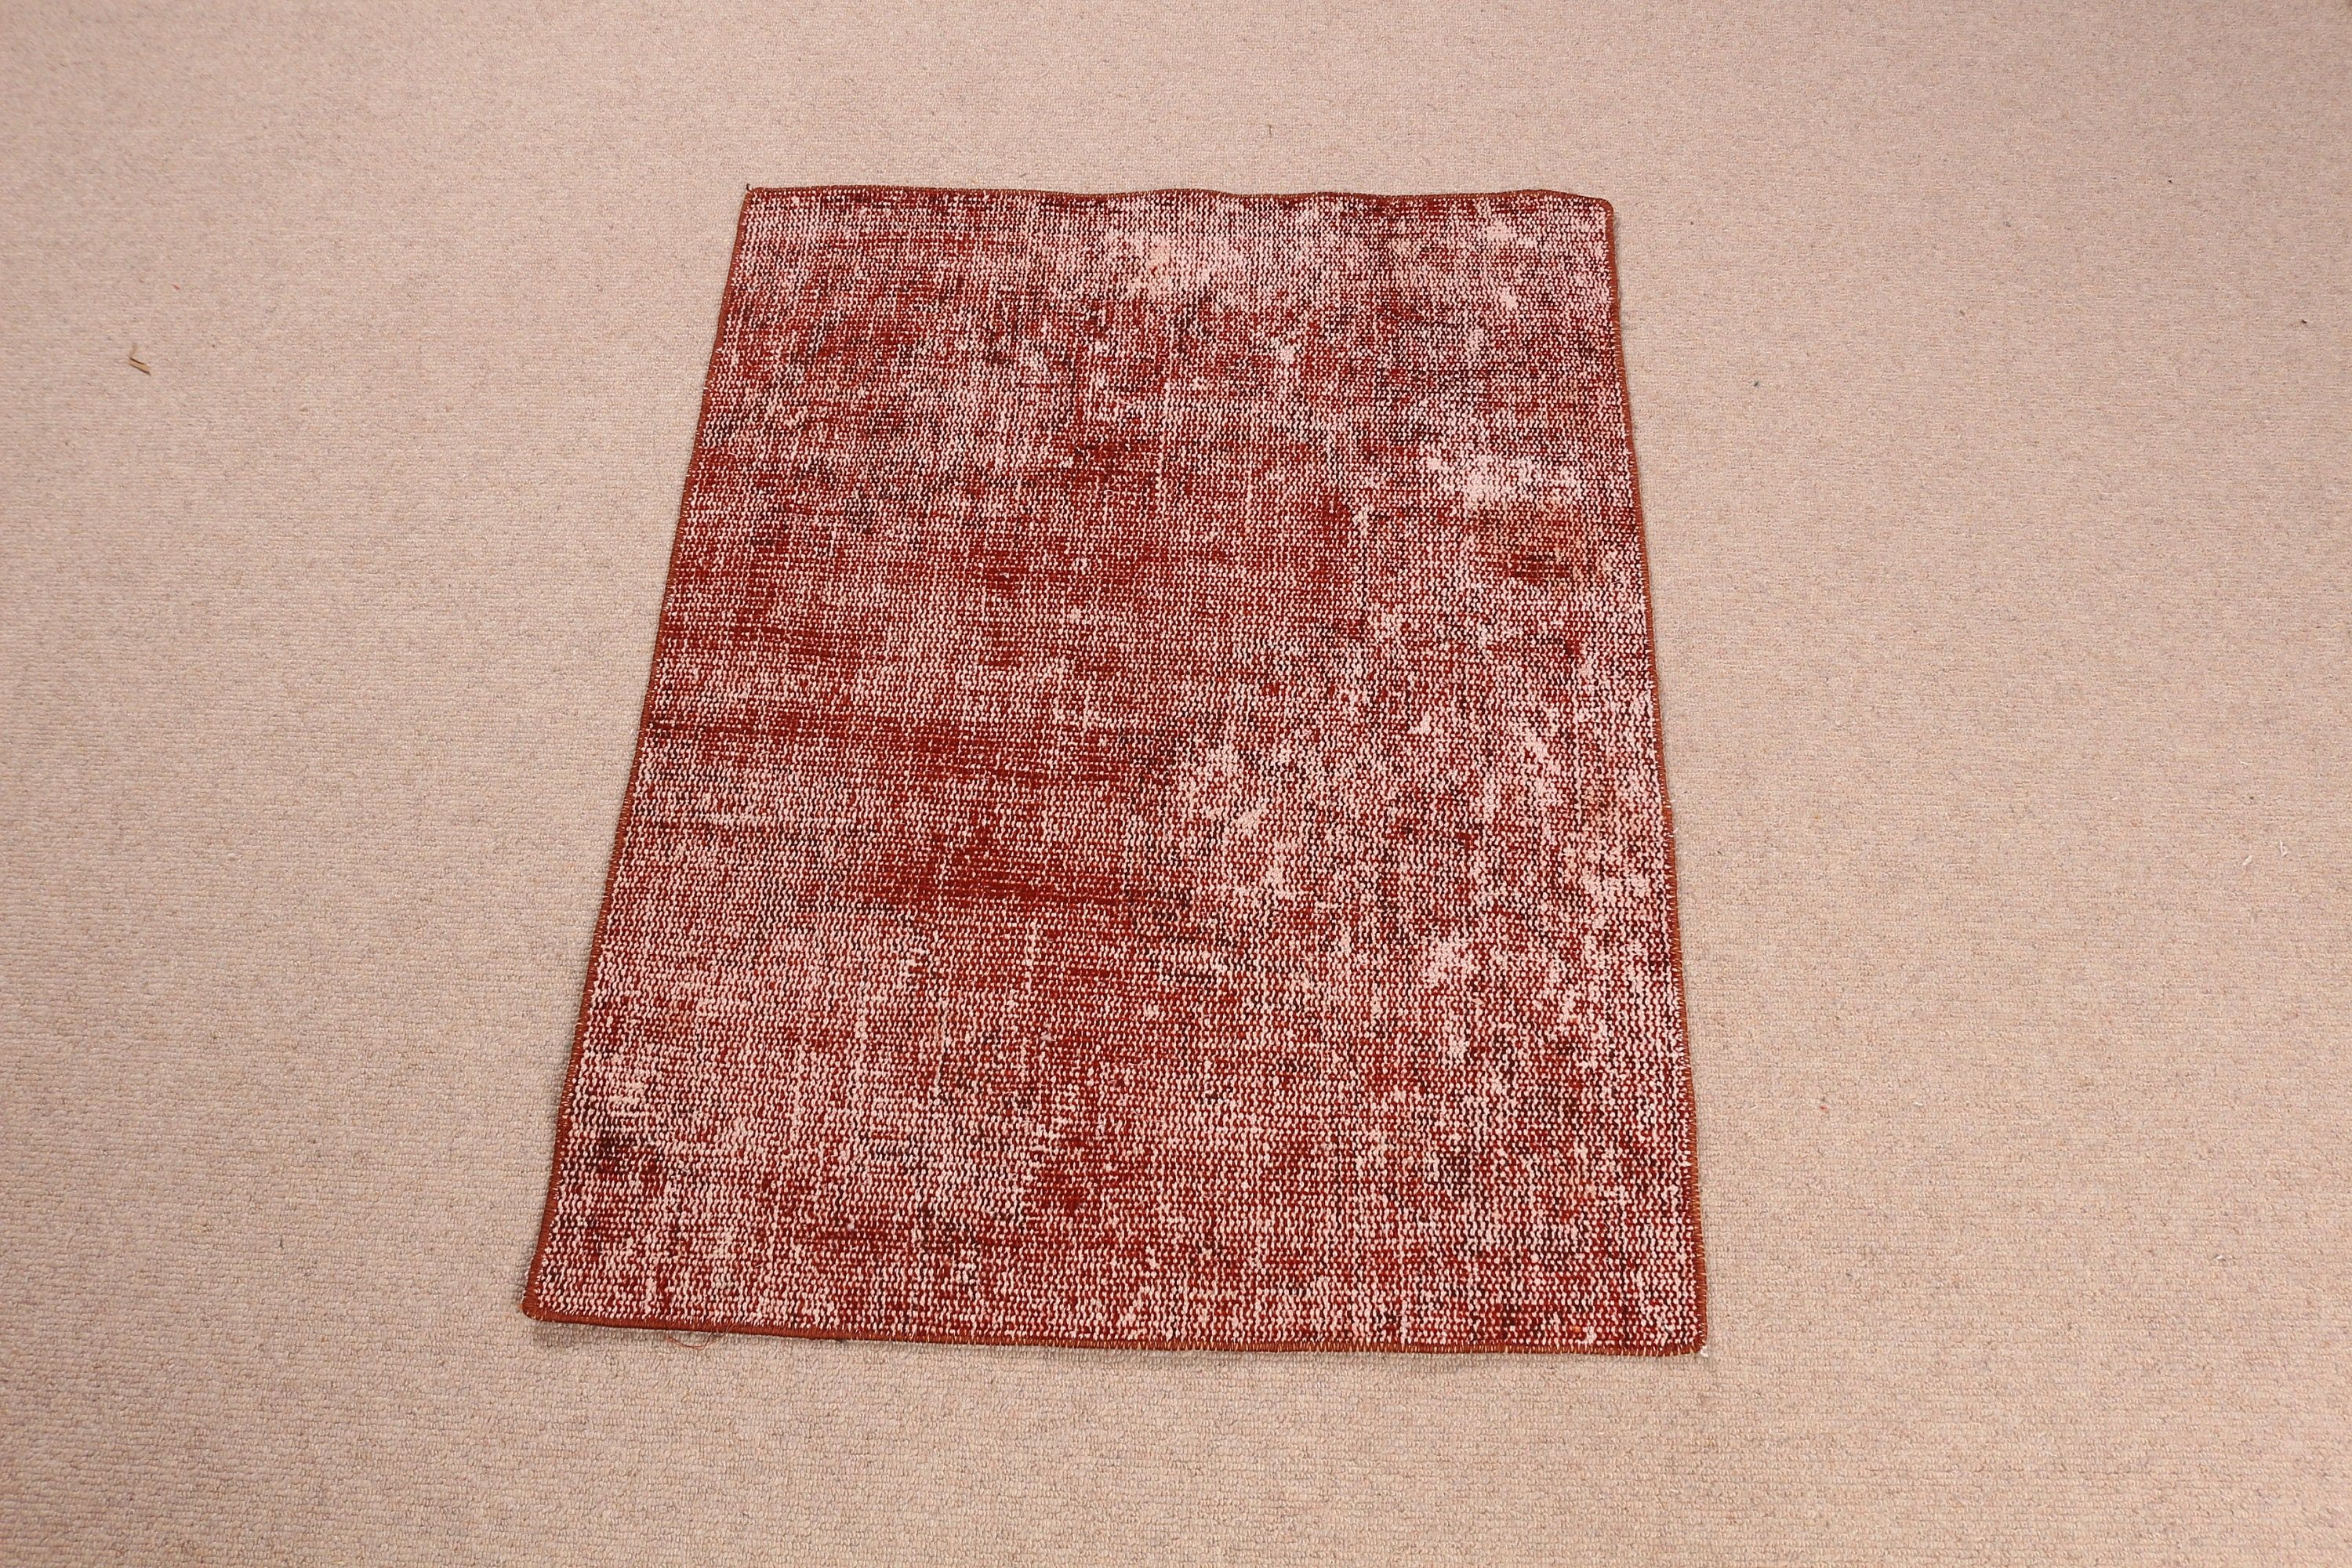 Red Wool Rugs, Kitchen Rug, Art Rug, Vintage Rug, Eclectic Rug, Rugs for Bath, Turkish Rug, Oriental Rug, Bedroom Rugs, 2.3x3 ft Small Rugs